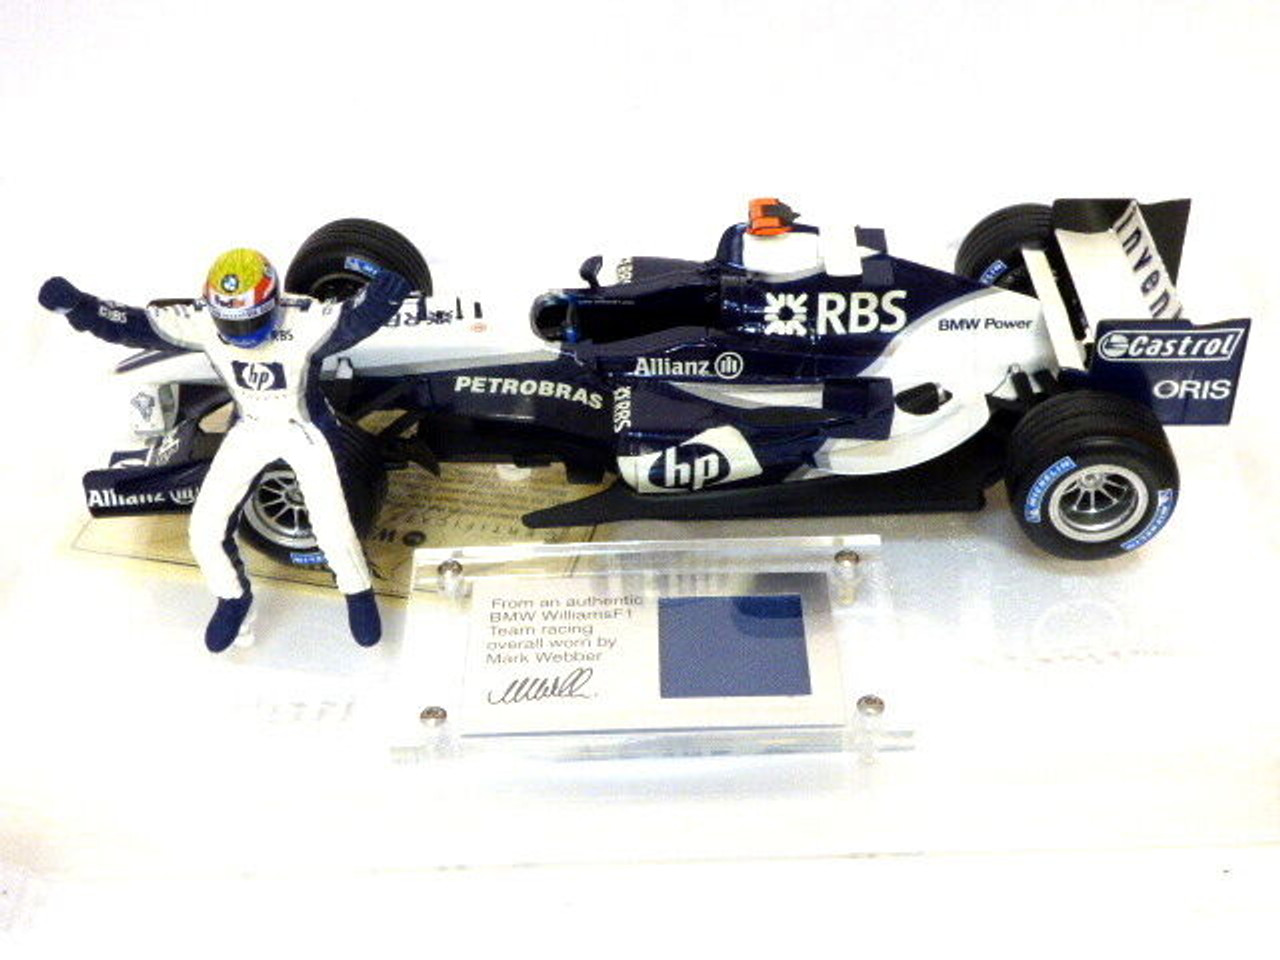 1/18 Hot Wheels Mattel 2005 Formula 1 Racing BMW Williams Mark Webber Car  Model with Figure - LIVECARMODEL.com